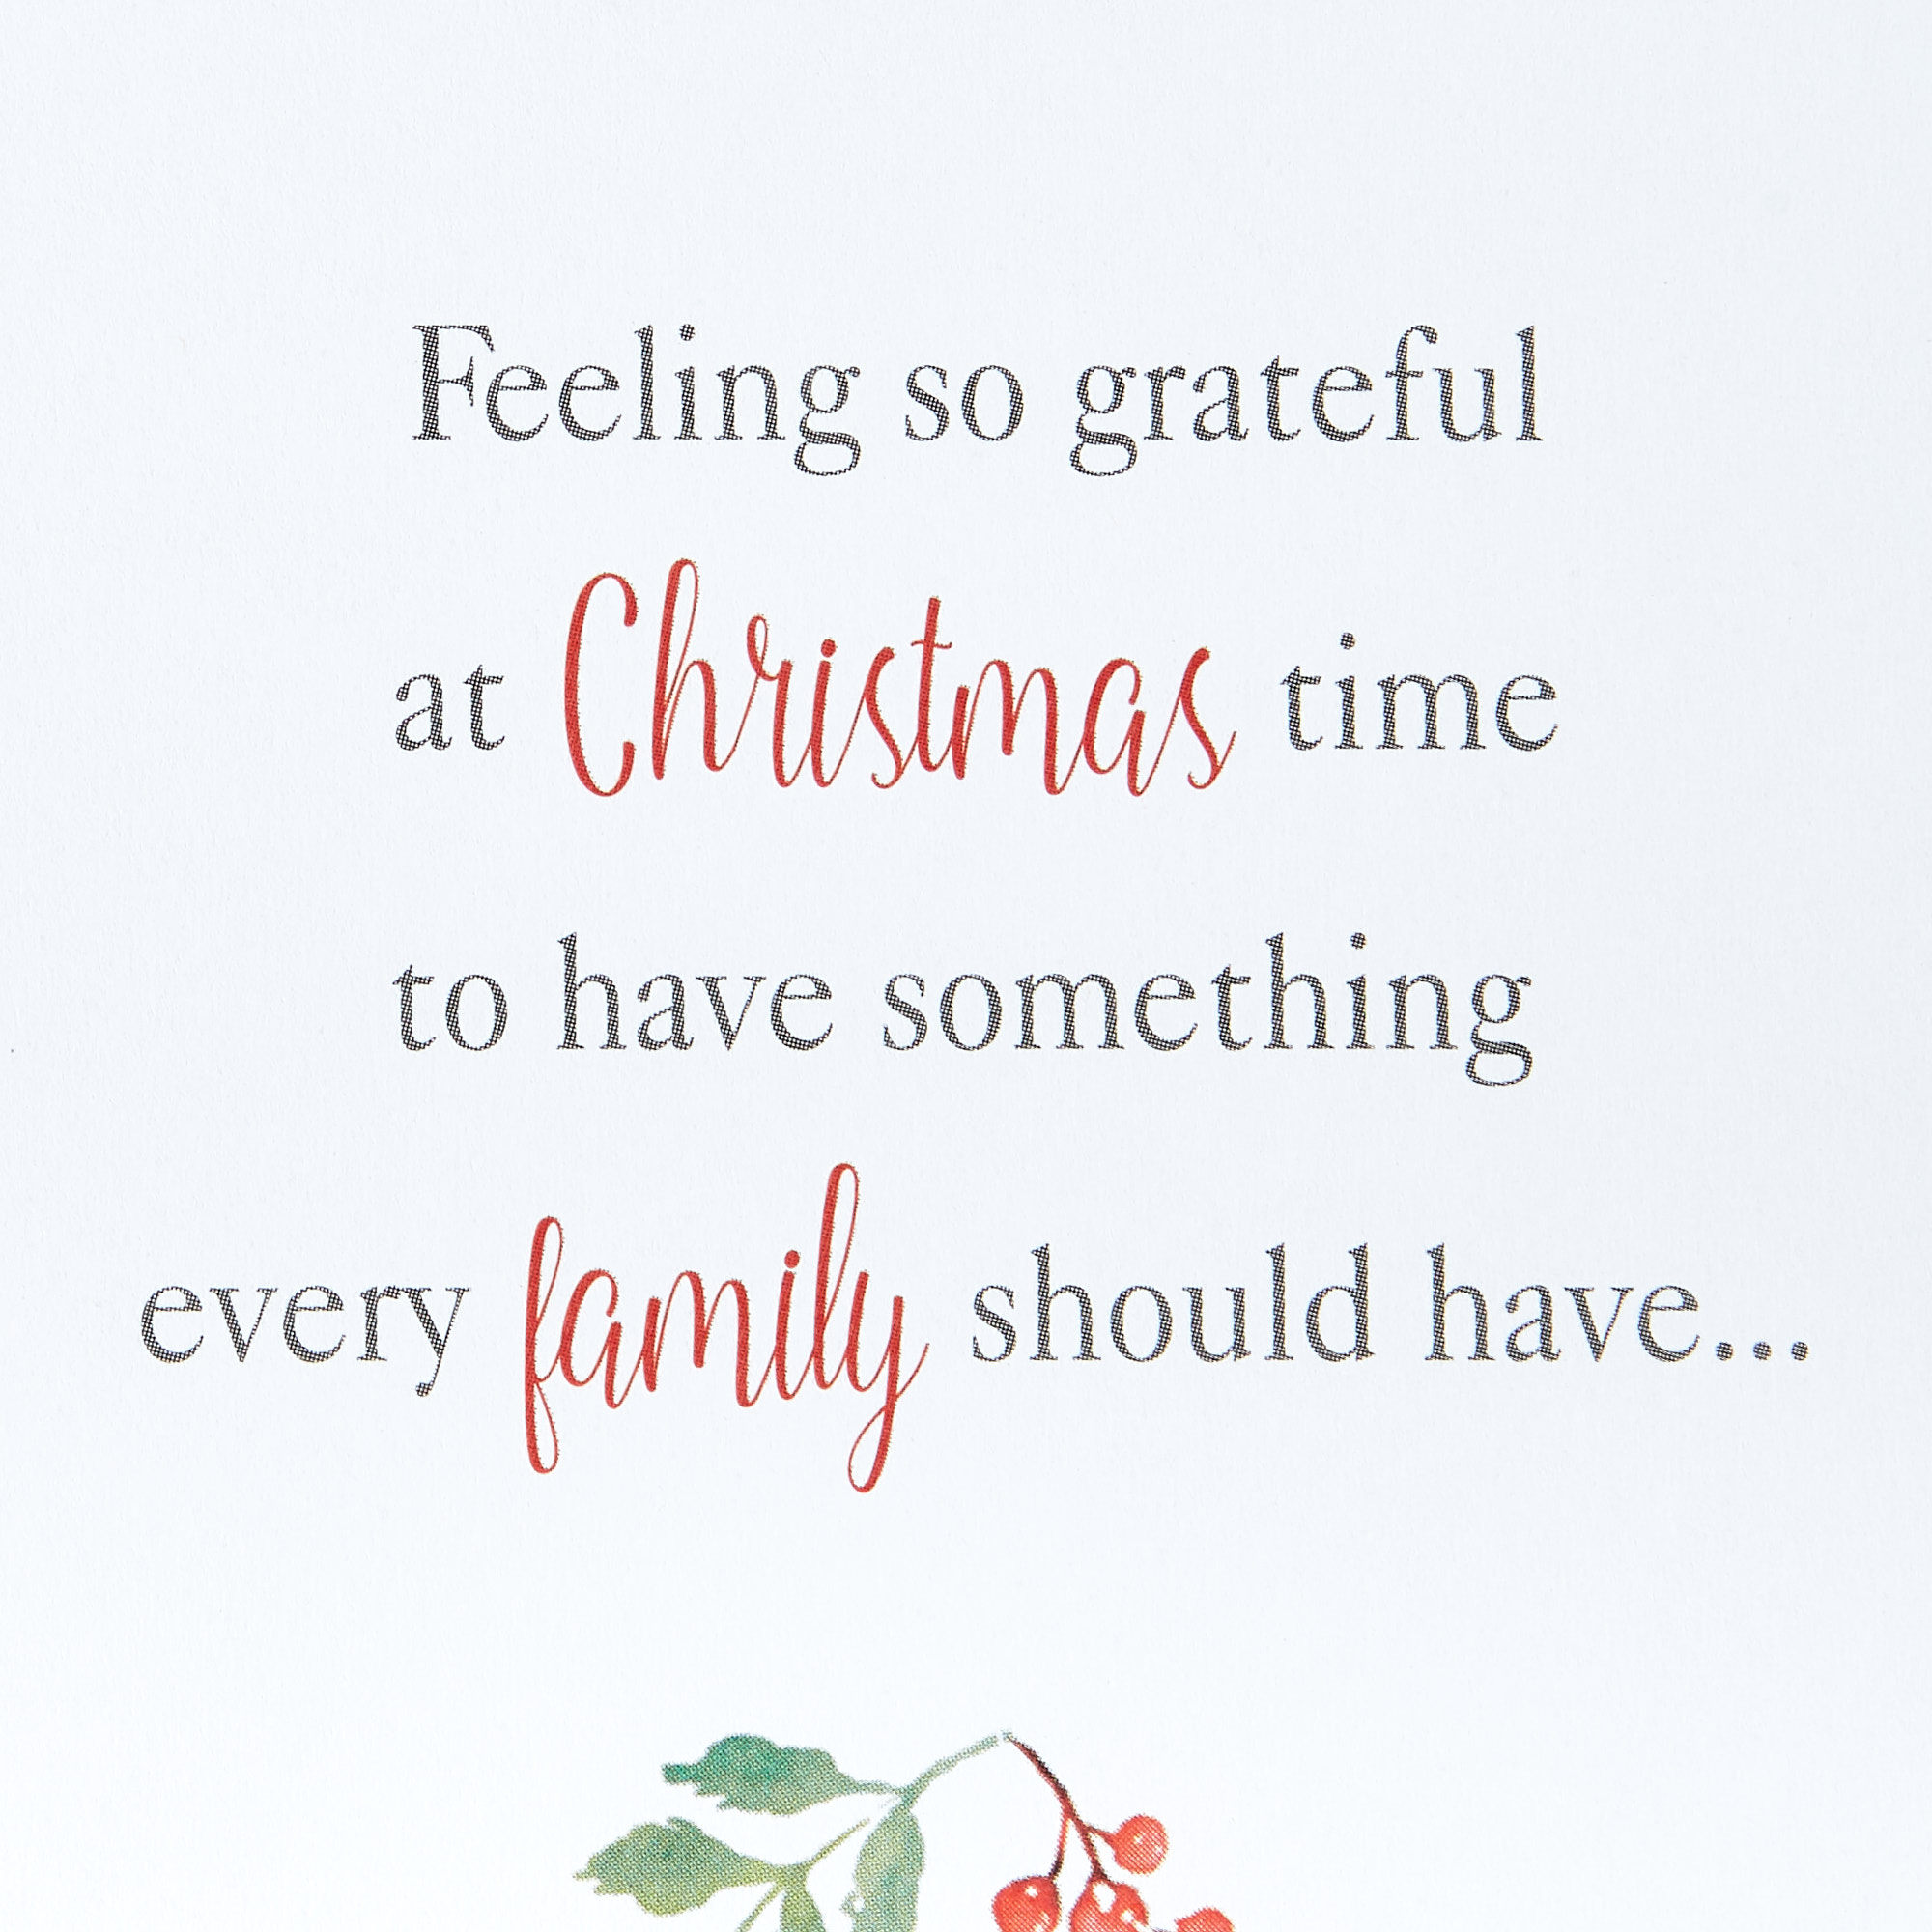 Christmas Card - To A Fantastic Grandson